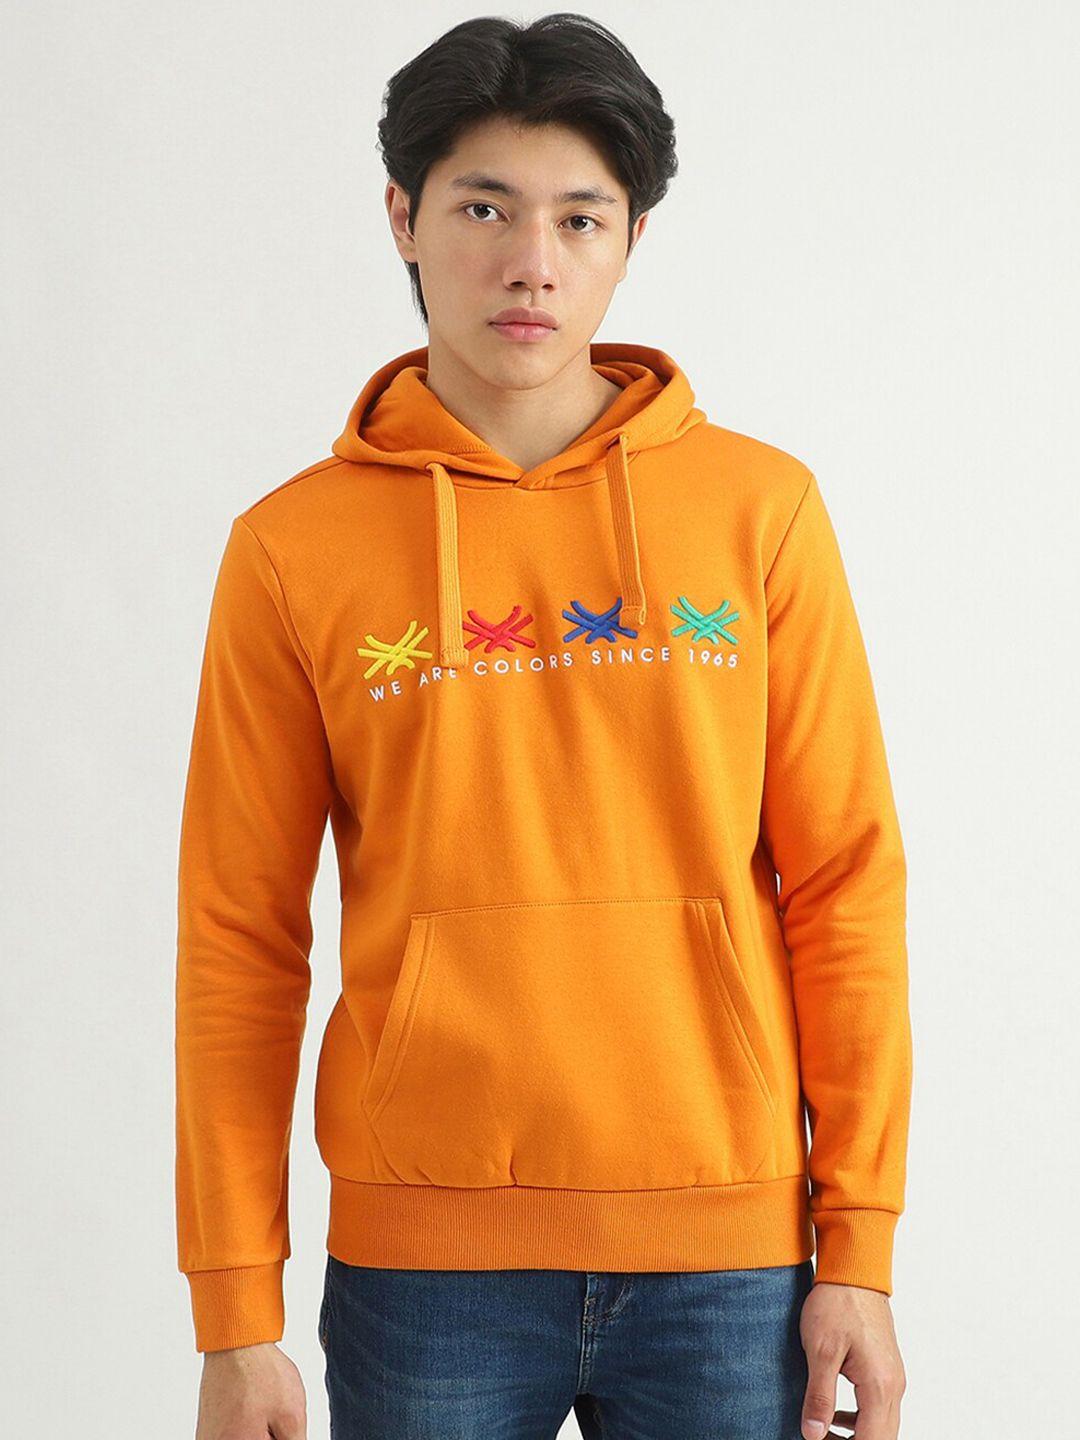 united-colors-of-benetton-men-orange-embroidered-hooded-sweatshirt